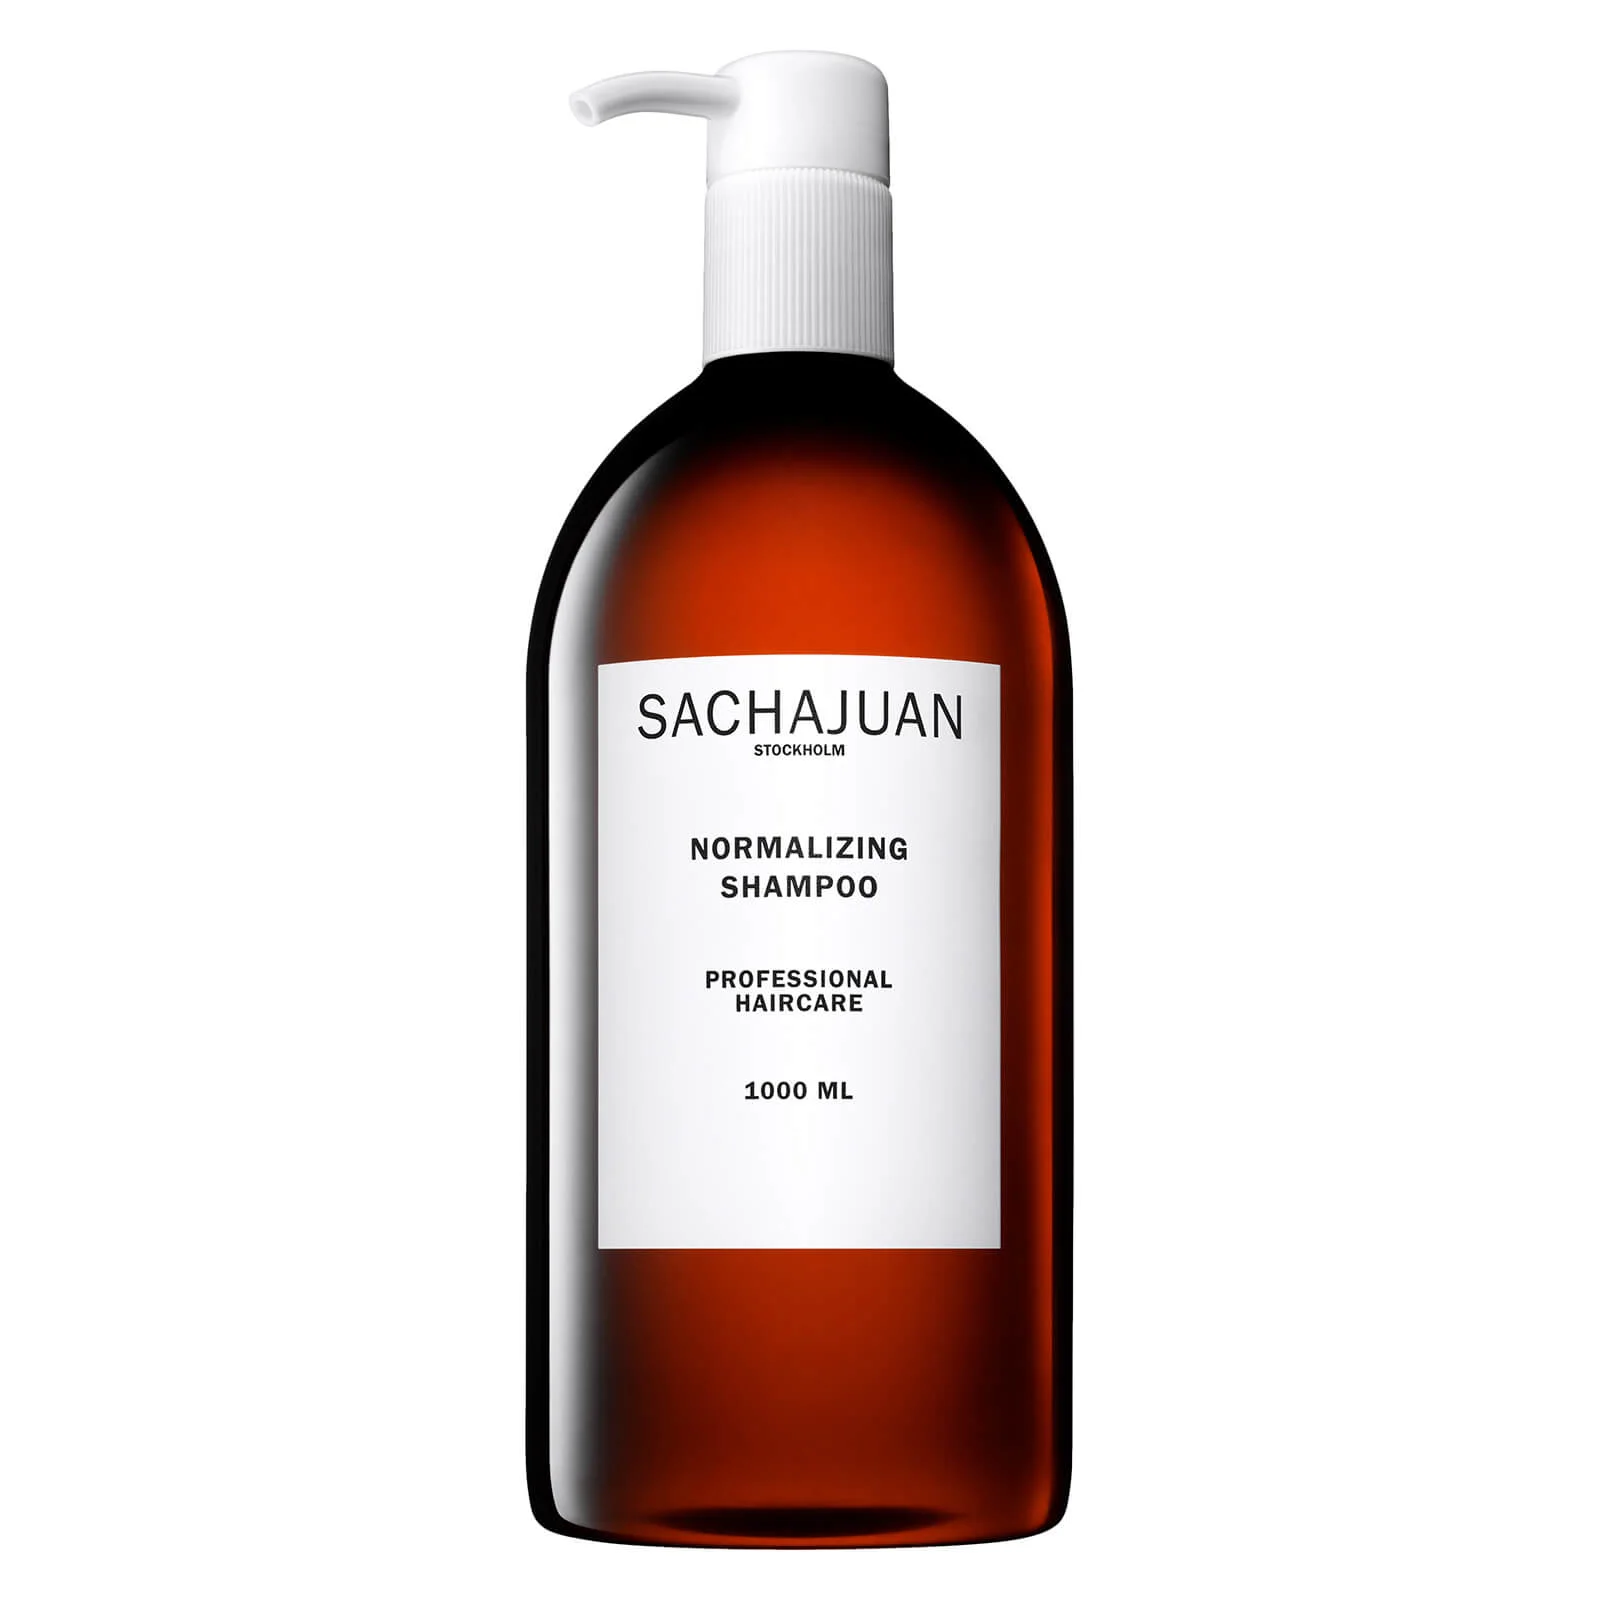 Sachajuan Normalizing Shampoo 1000ml Image 1